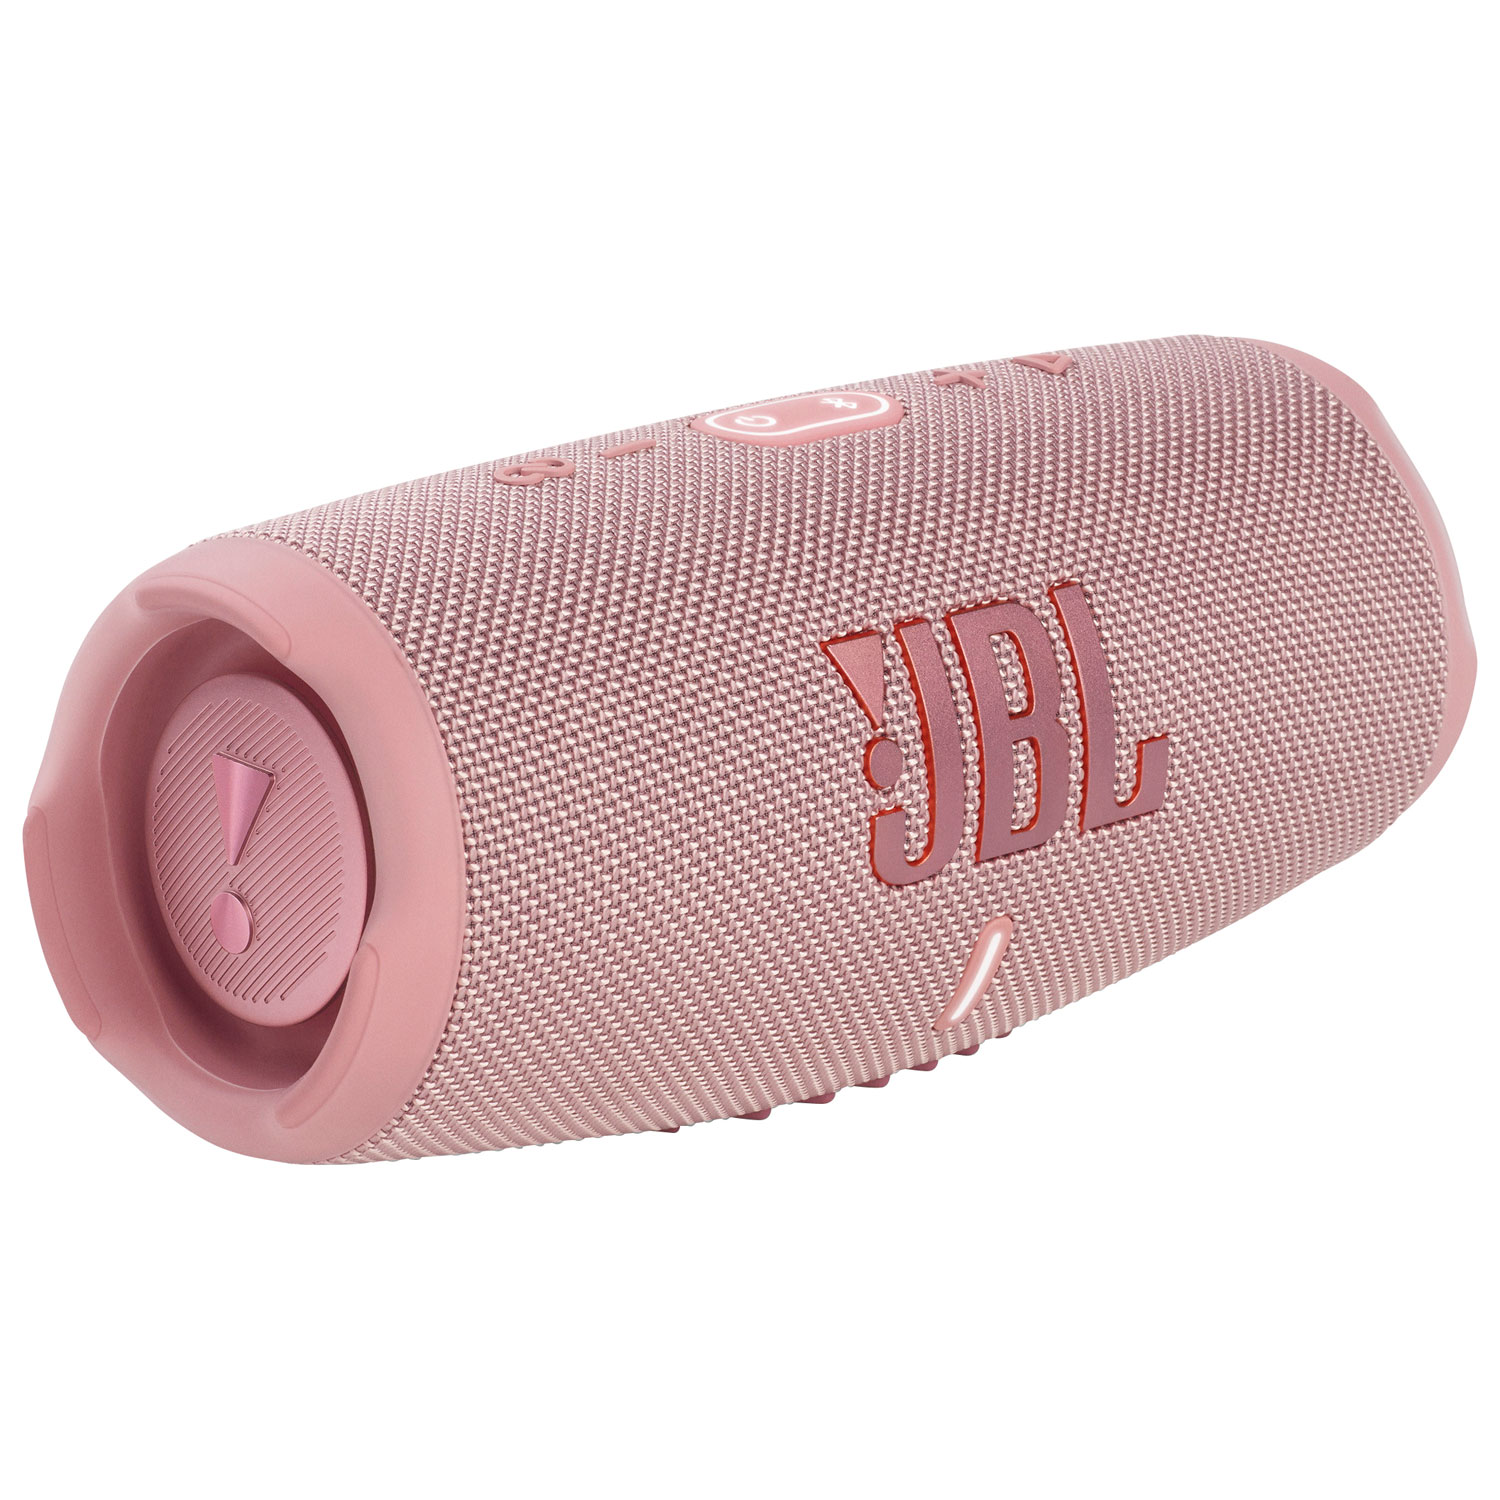 JBL Charge 5 Waterproof Bluetooth Wireless Speaker - Pink